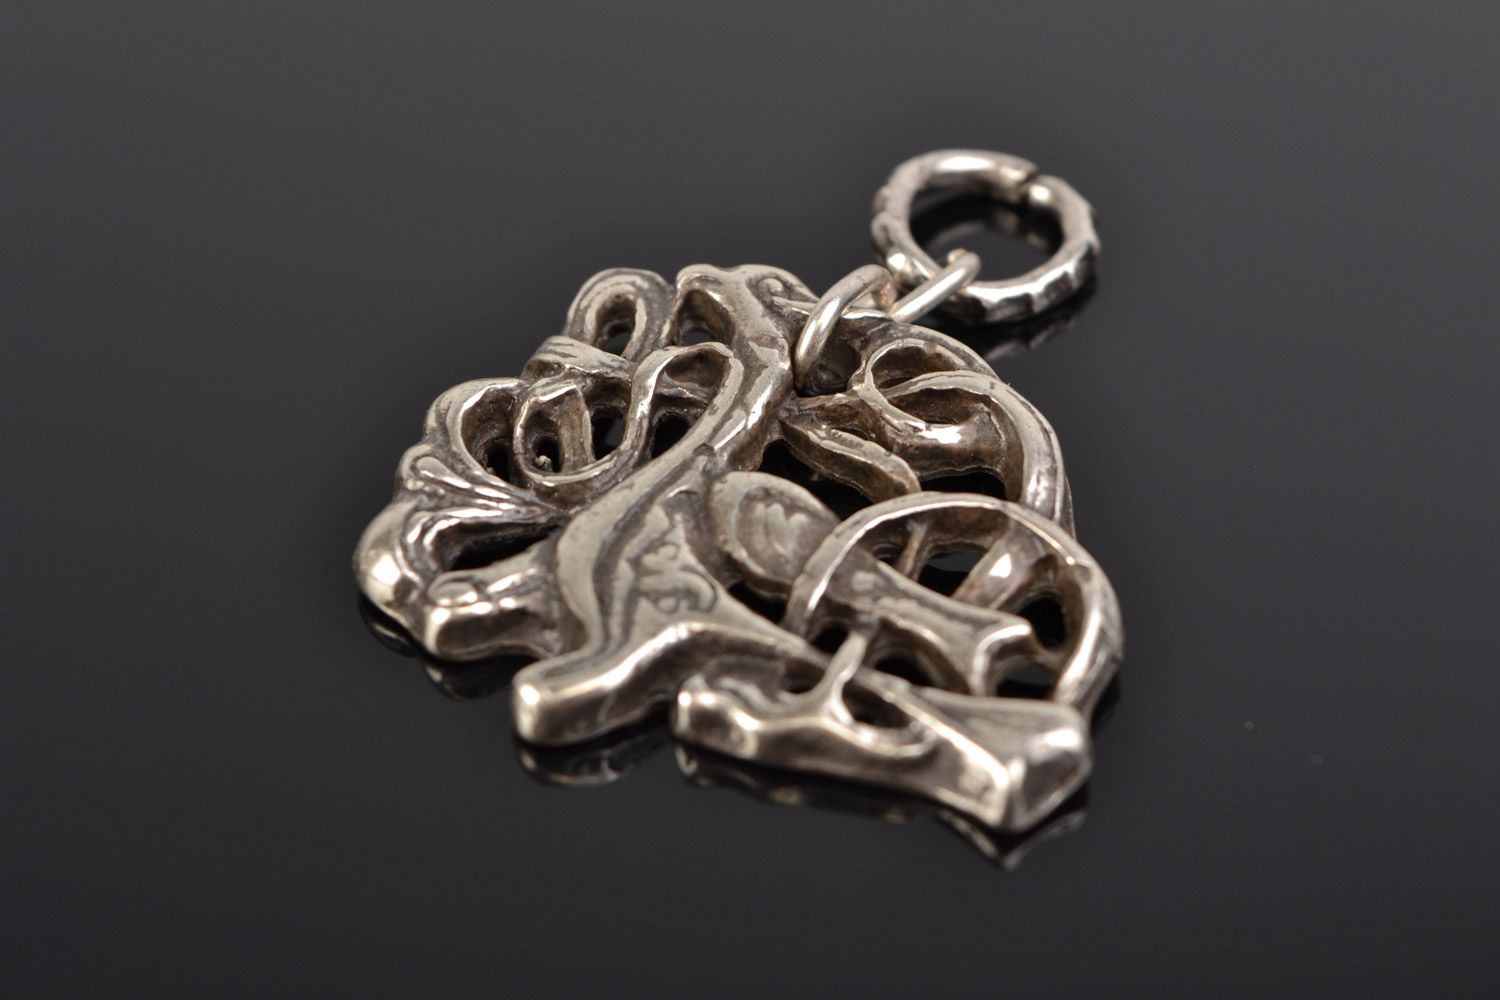 Handmade neck pendant cast of hypoallergenic metal alloy in ethnic style photo 1